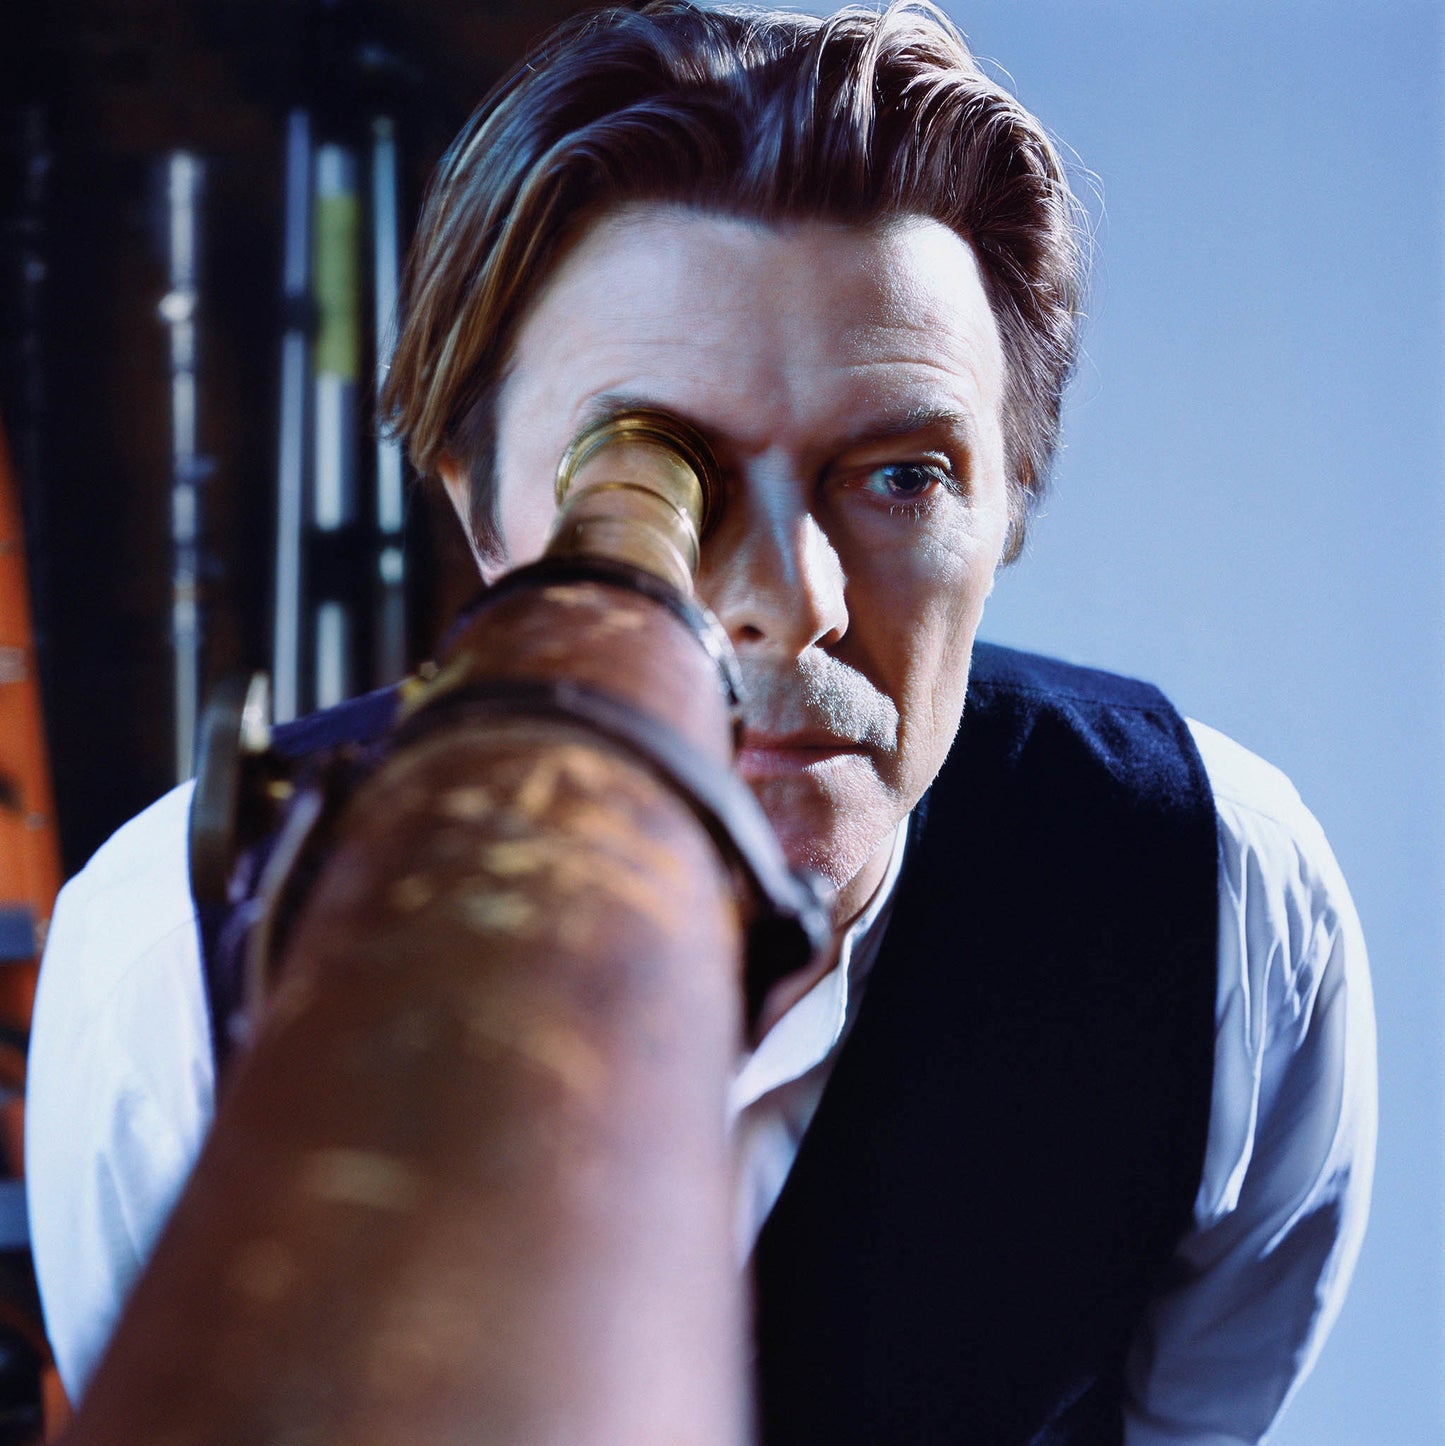 David Bowie, Seeing You From Afar, 2001 by Markus Klinko